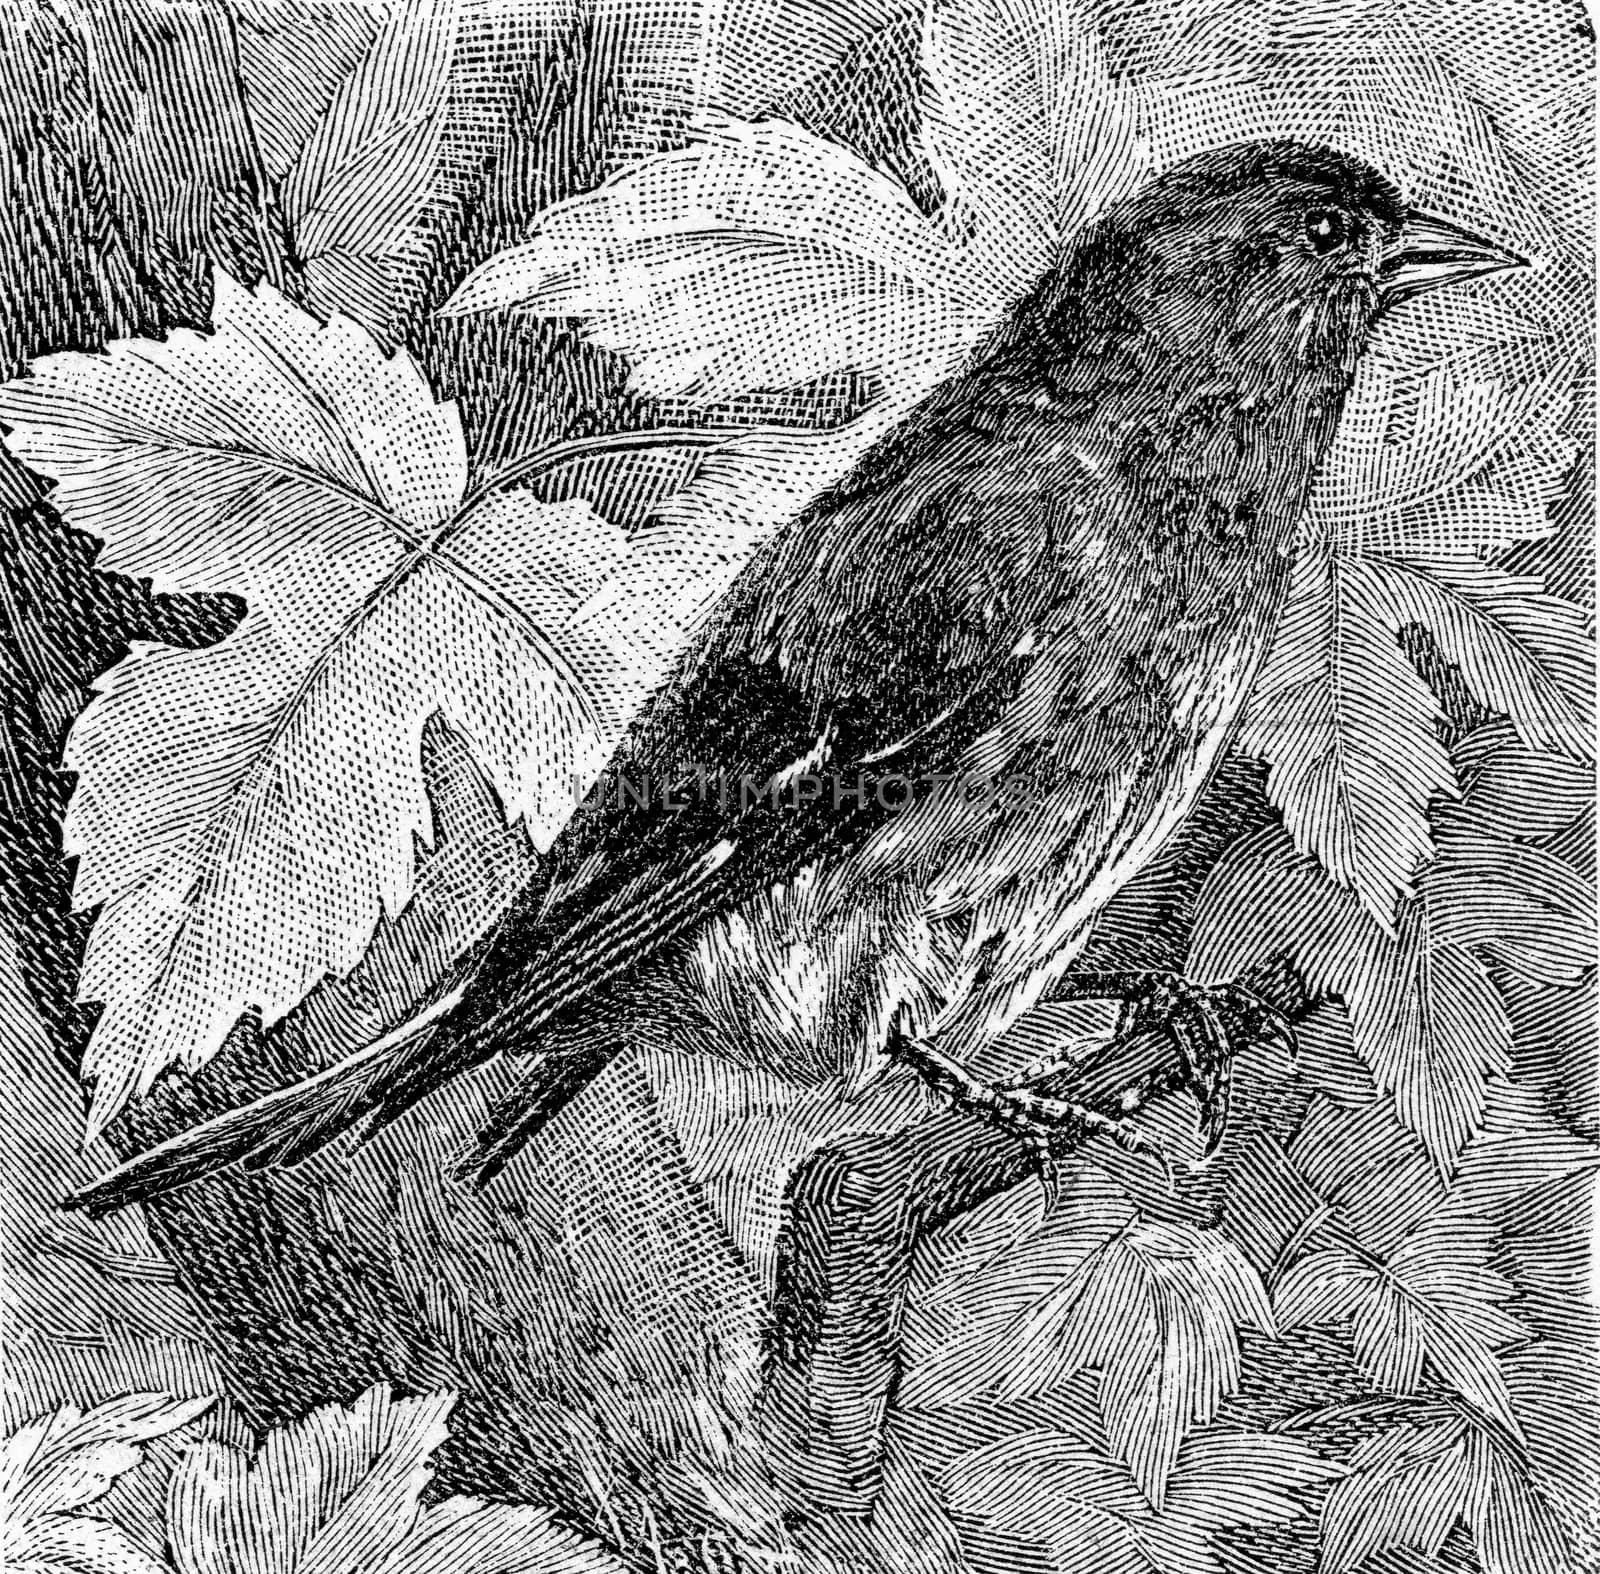 The siskin, vintage engraved illustration. From Deutch Vogel Teaching in Zoology.
